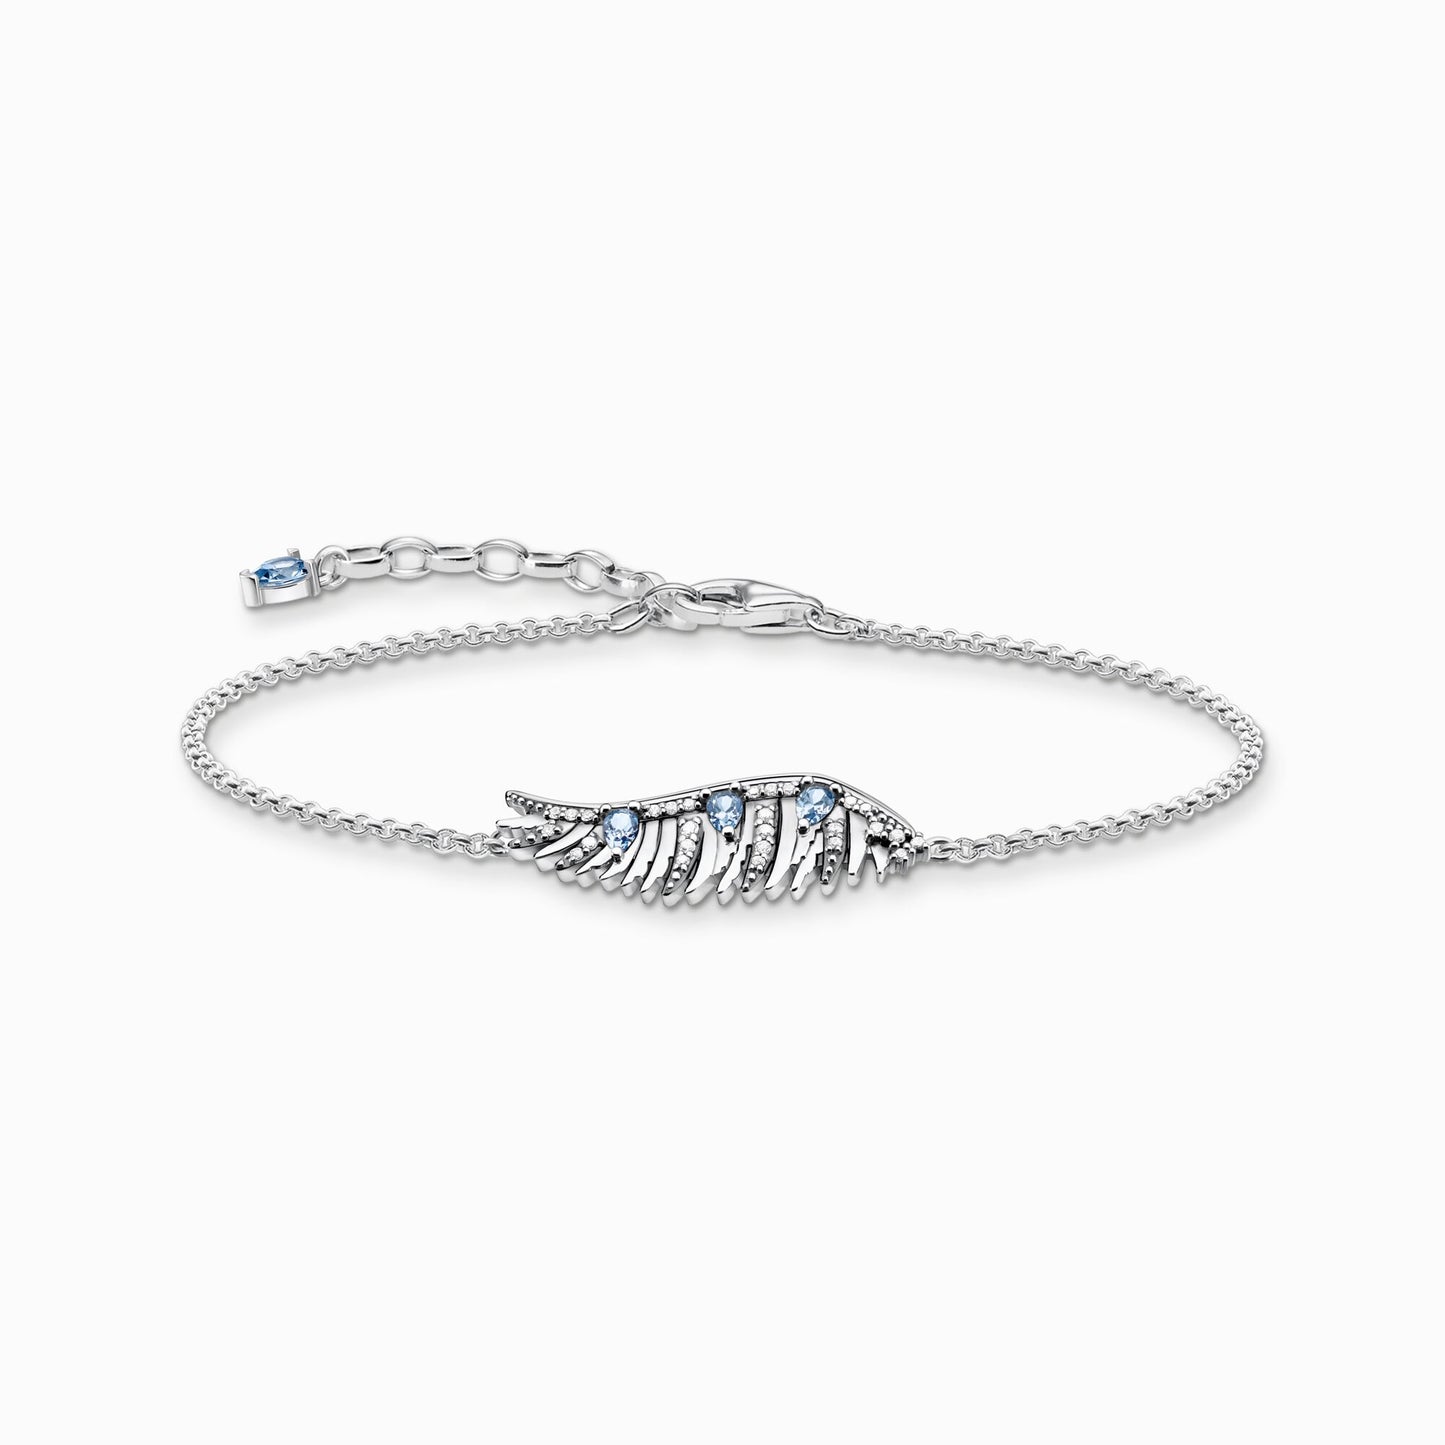 Thomas Sabo Phoenix Wing with Blue Stones Silver Bracelet